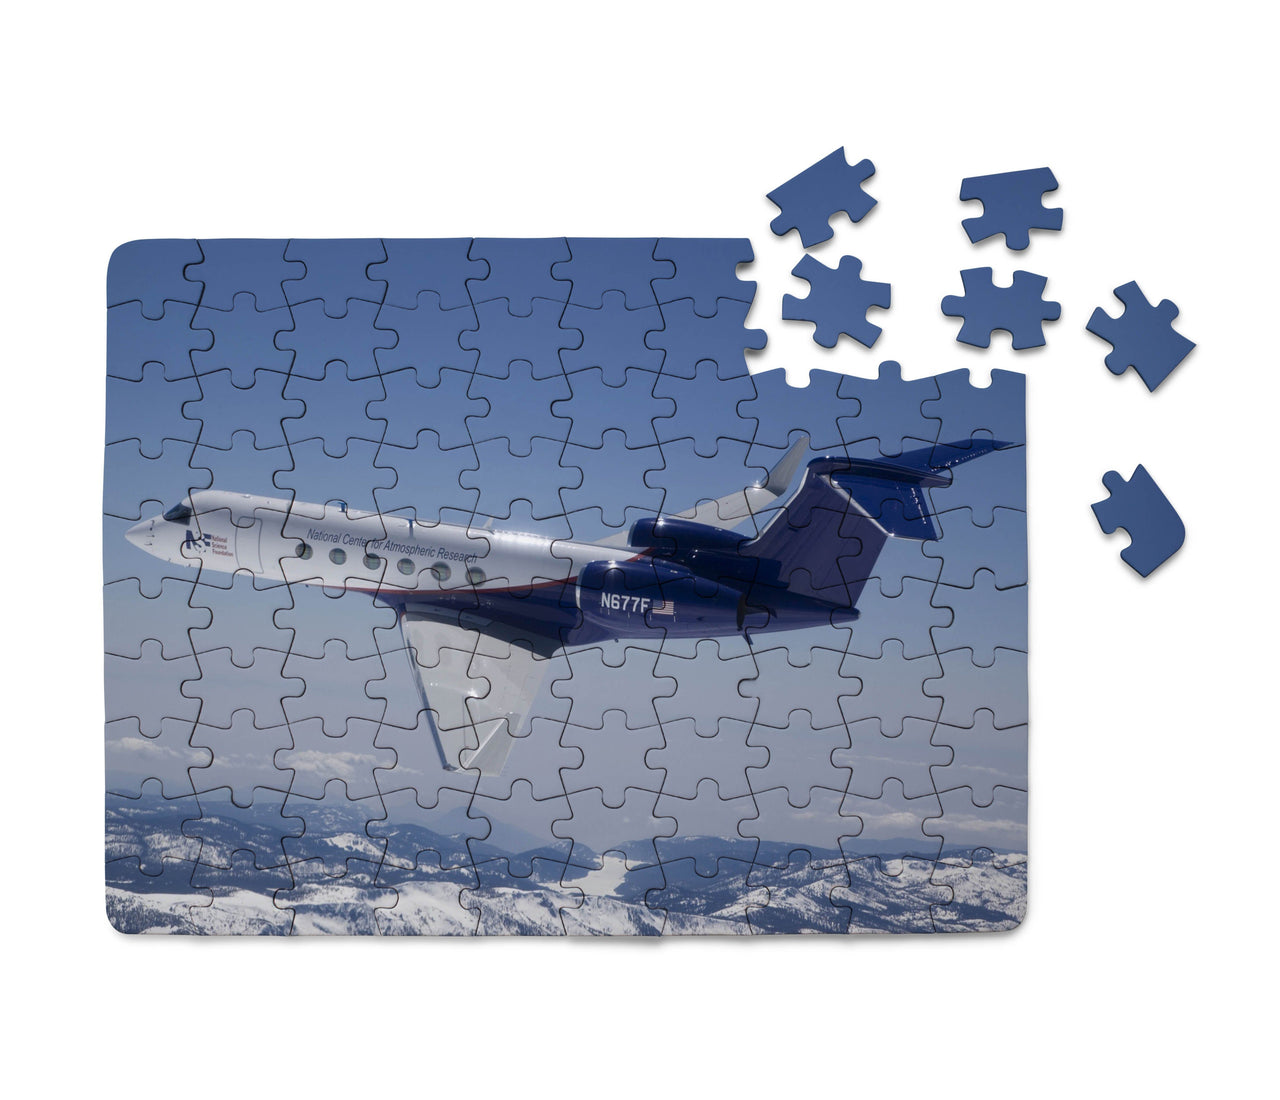 Cruising Gulfstream Jet Printed Puzzles Aviation Shop 